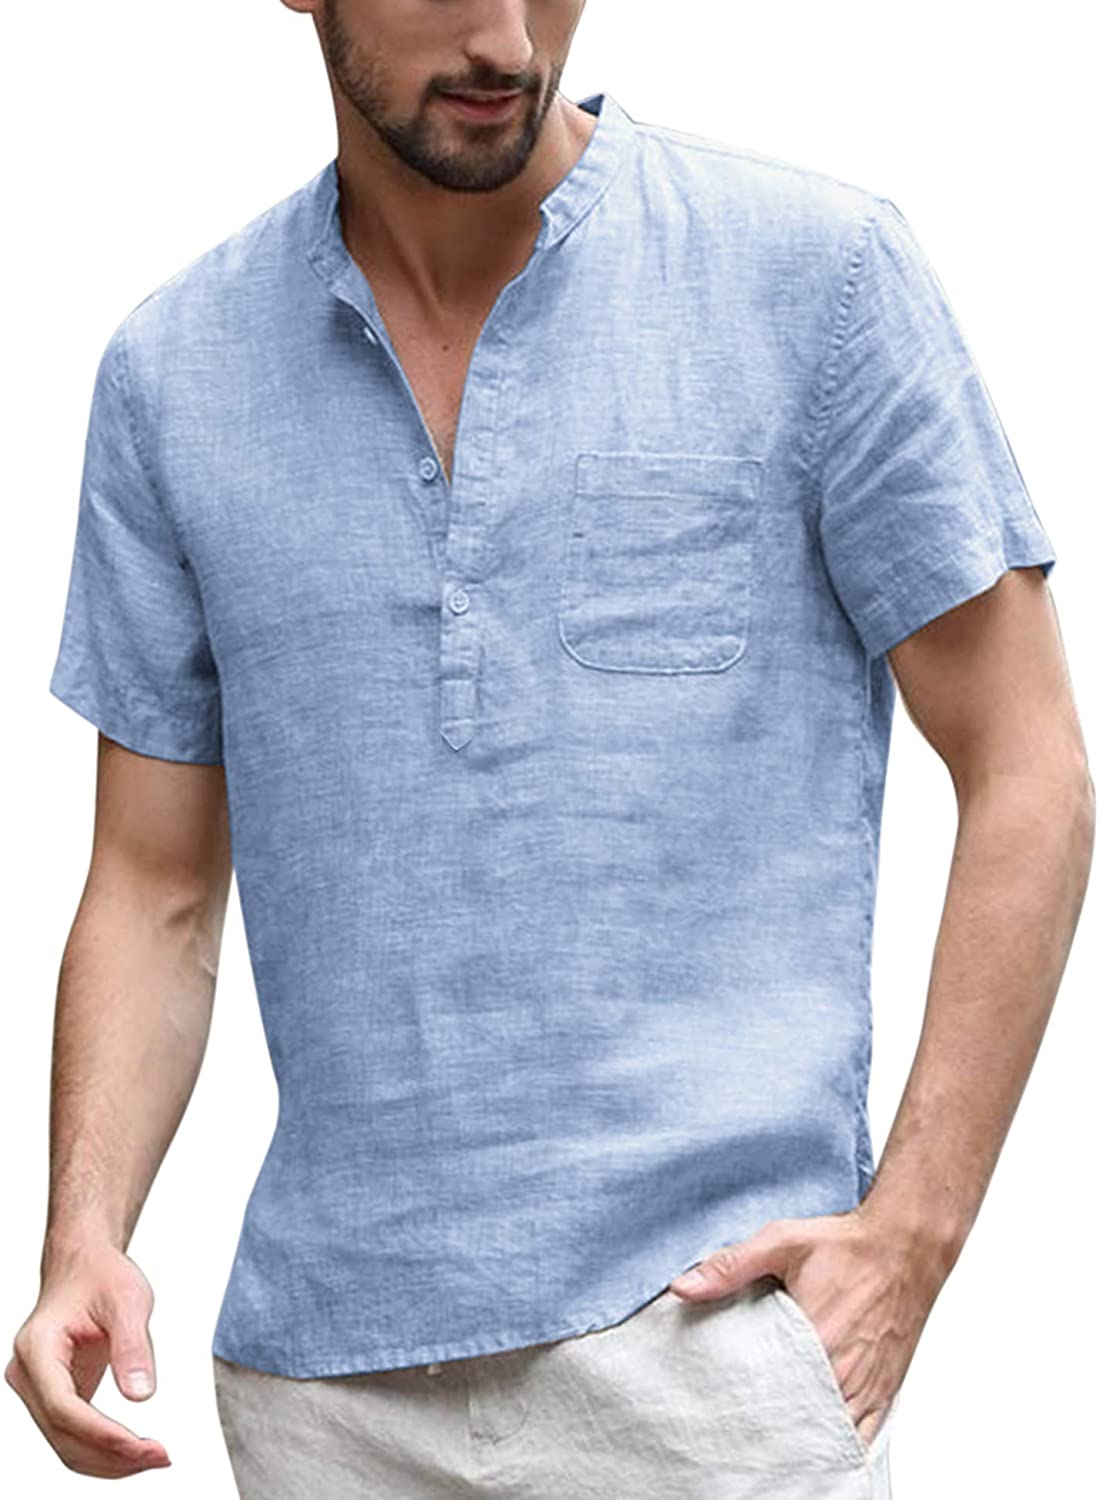 Mens Cotton Linen Henley Shirt Long Sleeve Hippie Casual Beach T Shirts Vickyleb Mens Tops Blouse T Shirt